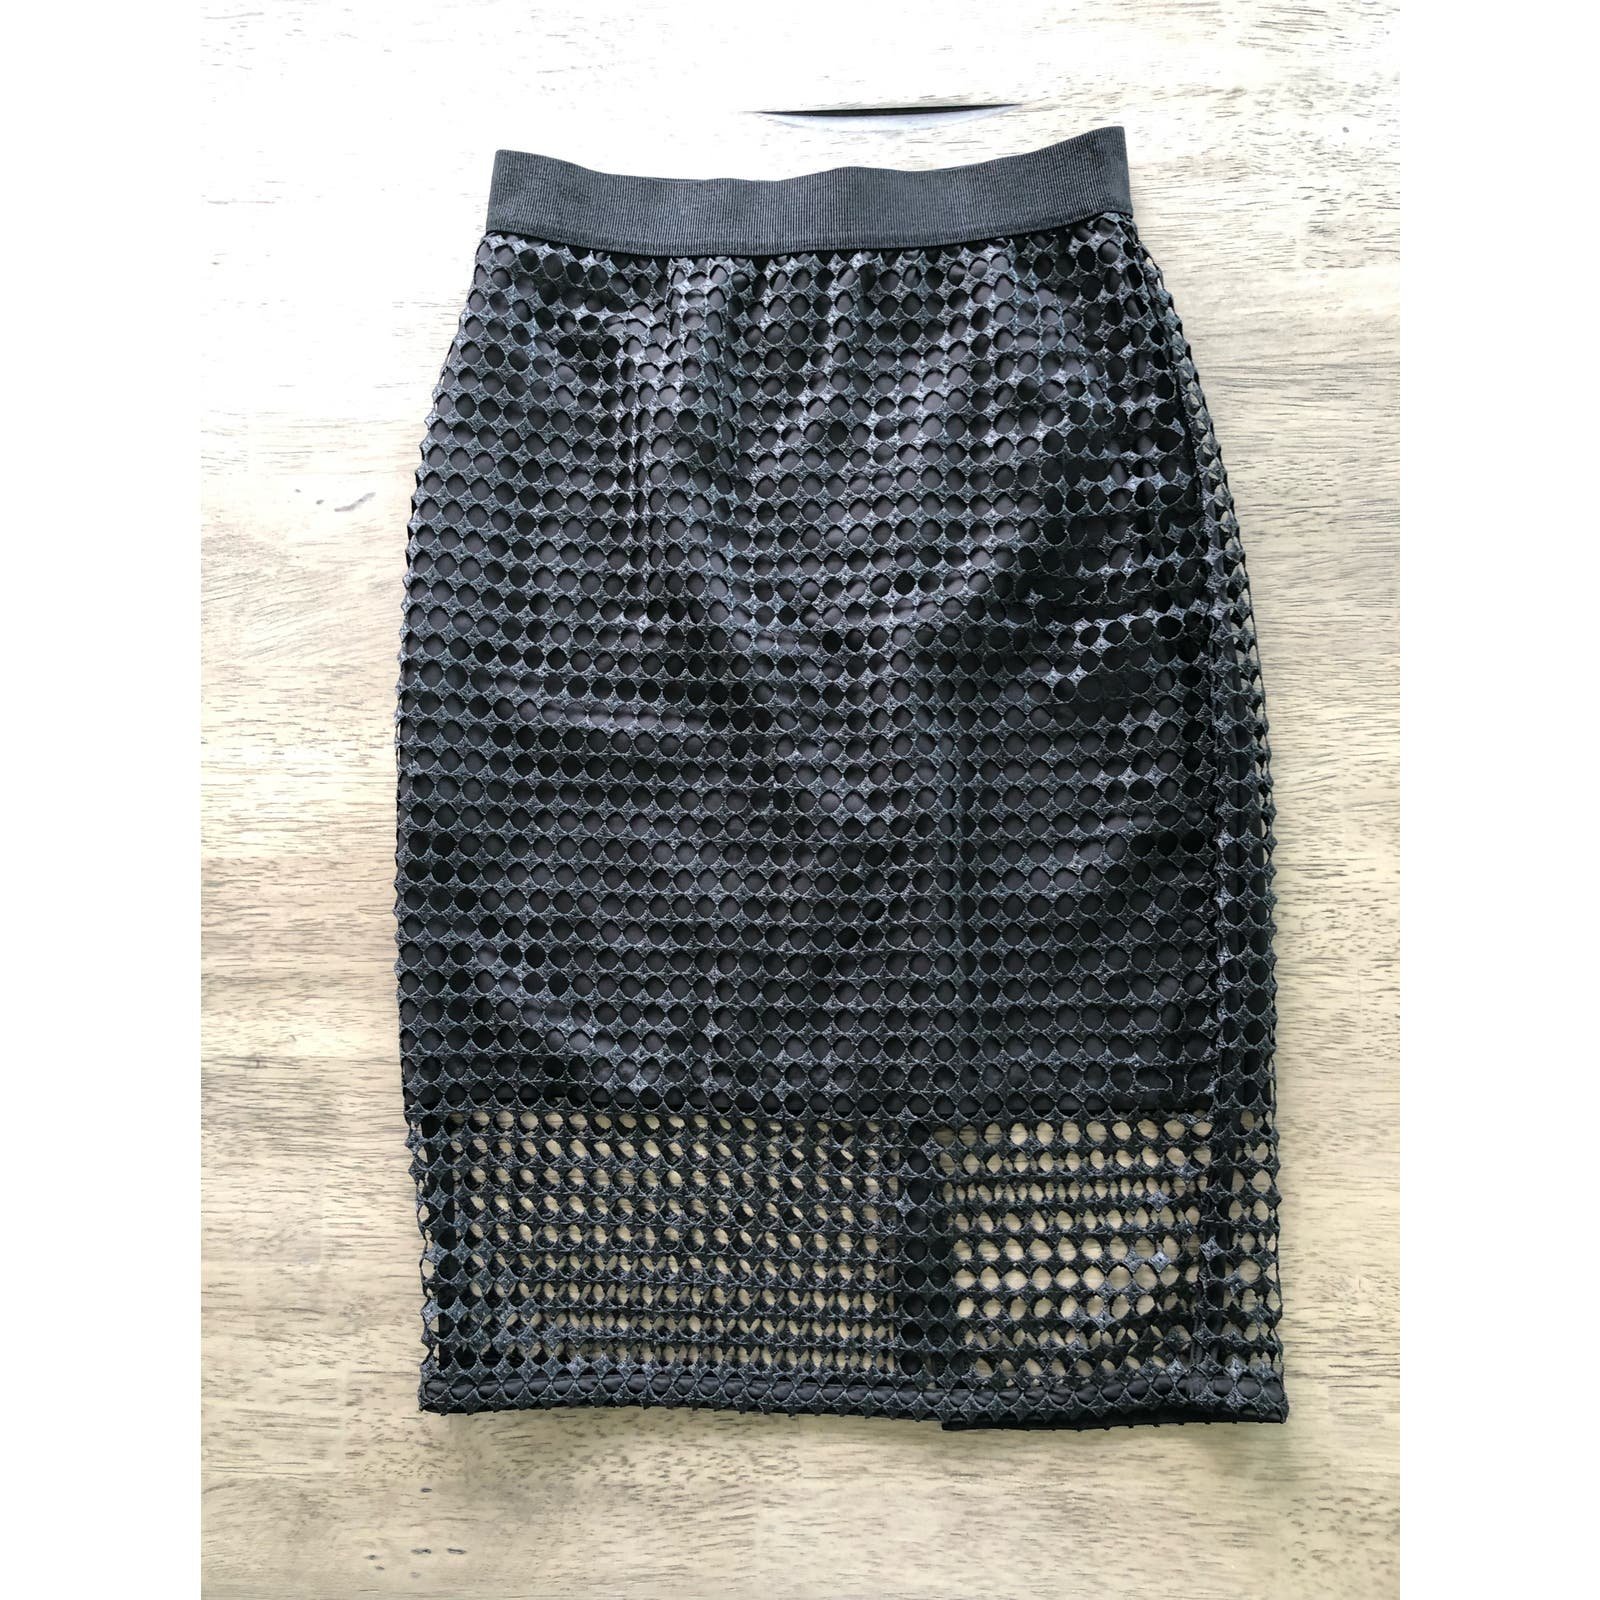 Special offer  Ann Taylor Black Crochet Overlay Midi Skirt - 2P pewJSXCA7 on sale